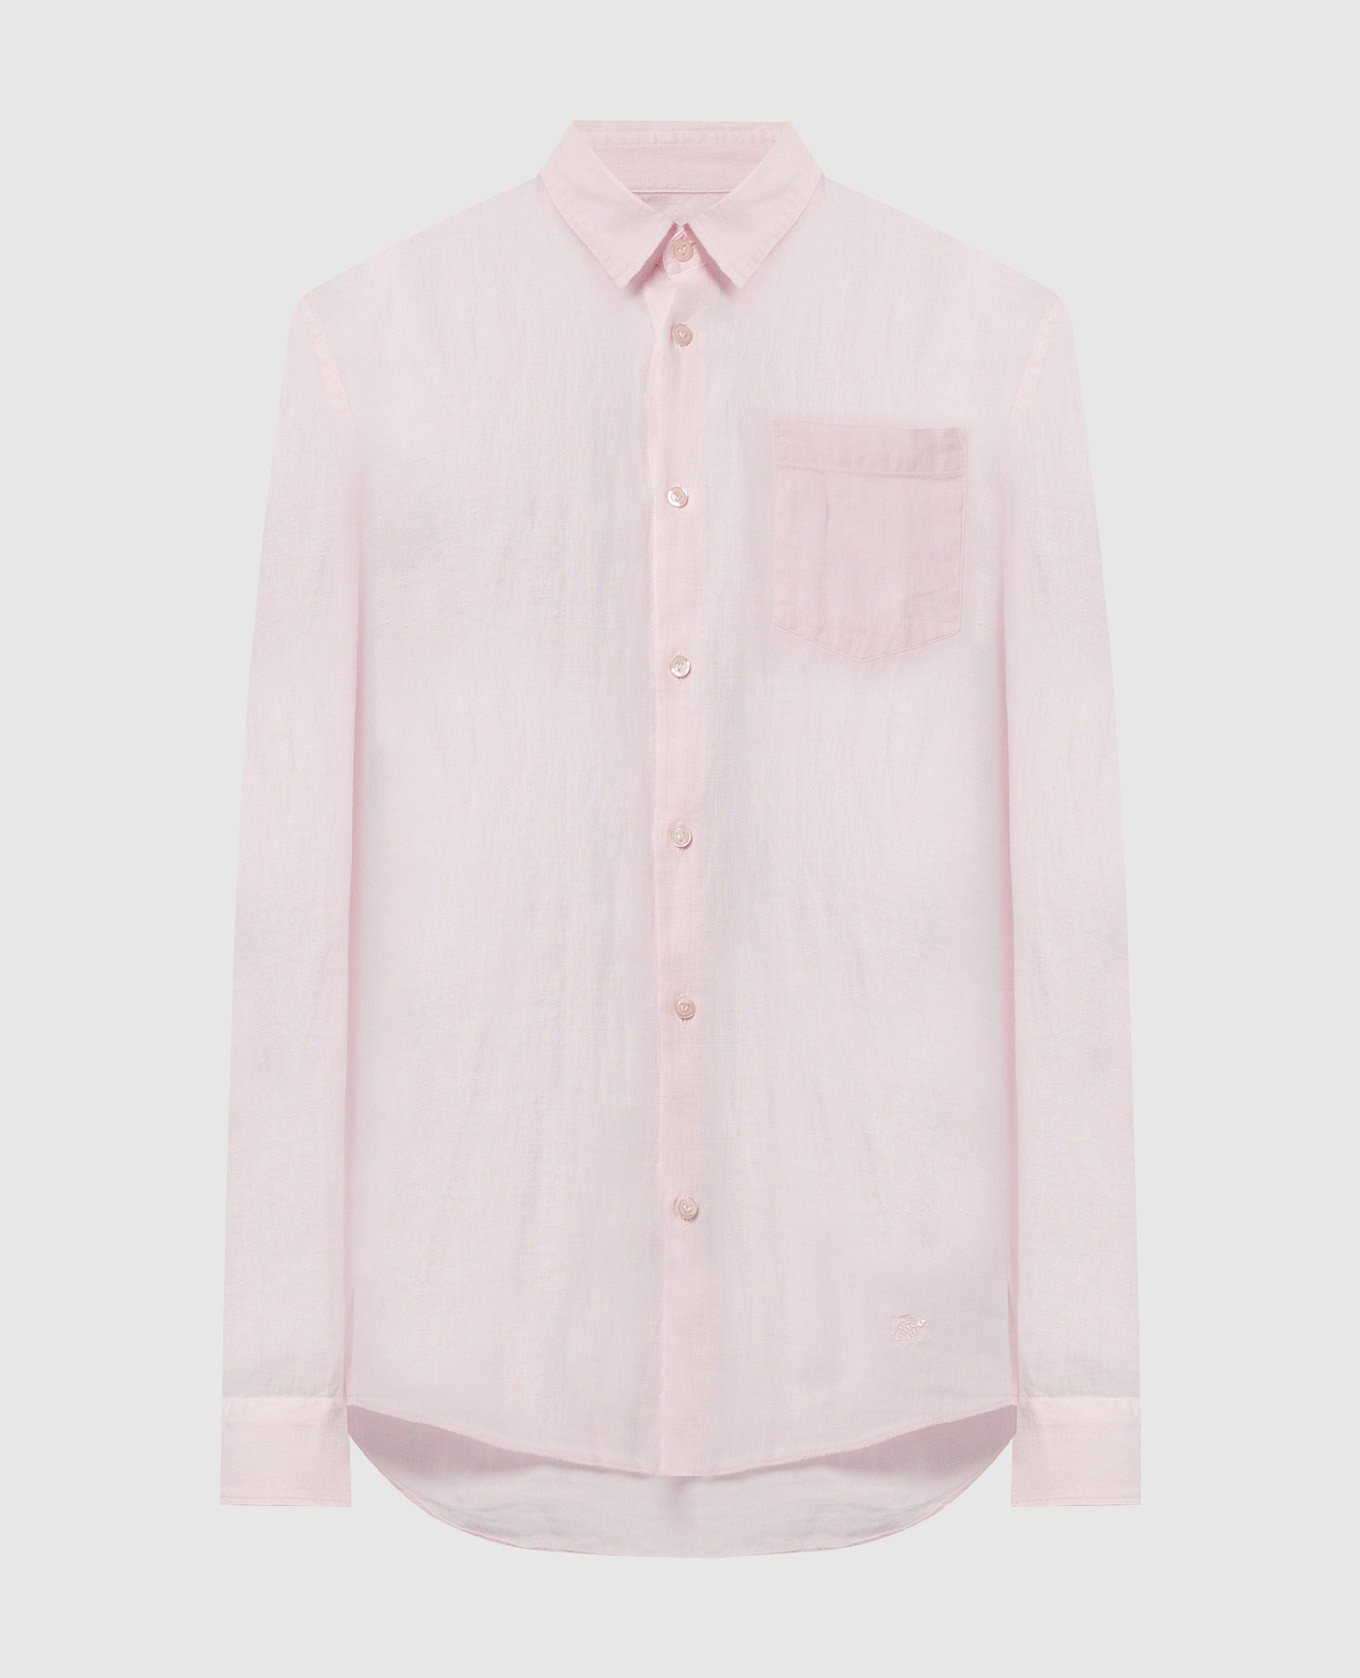 Caroubis pink linen shirt with logo